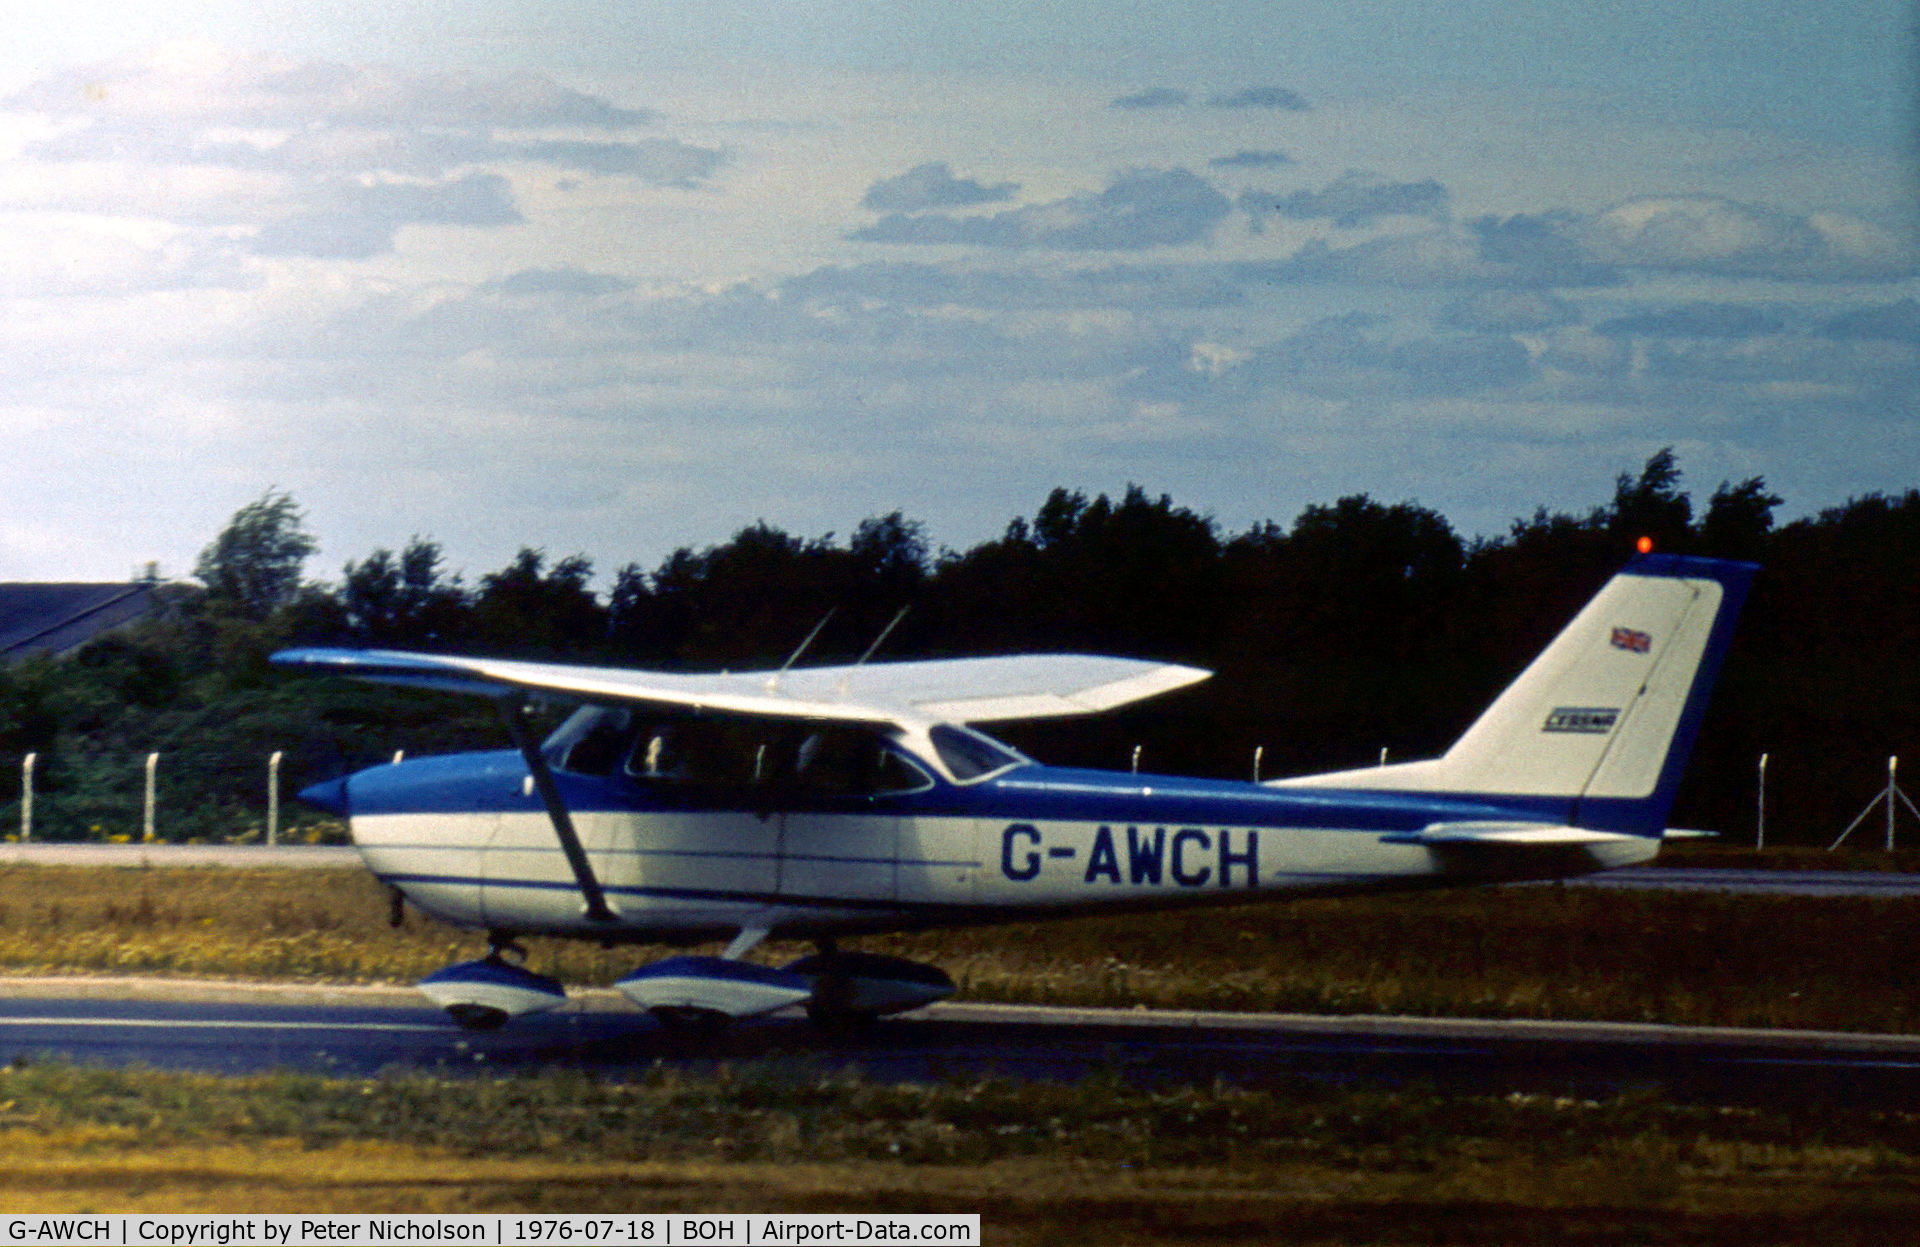 G-AWCH, 1968 Reims F172H Skyhawk C/N 0522, Reims F172H Skyhawk as seen at Bournemouth Hurn in the Summer of 1976.